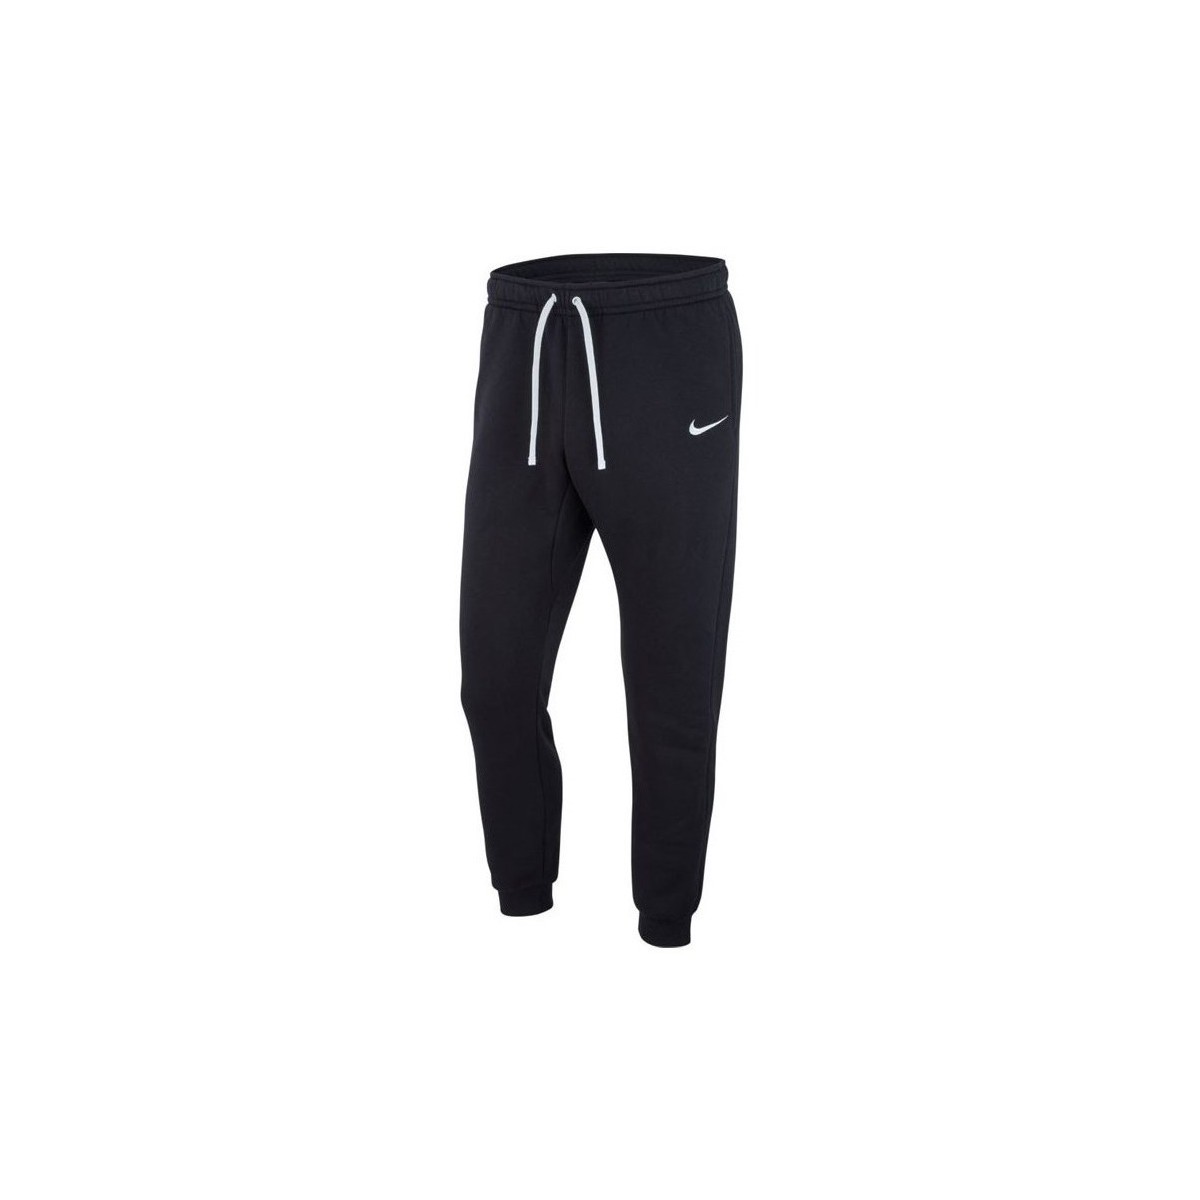 Vêtements Garçon Pantalons Nike JR Team Club 19 Noir